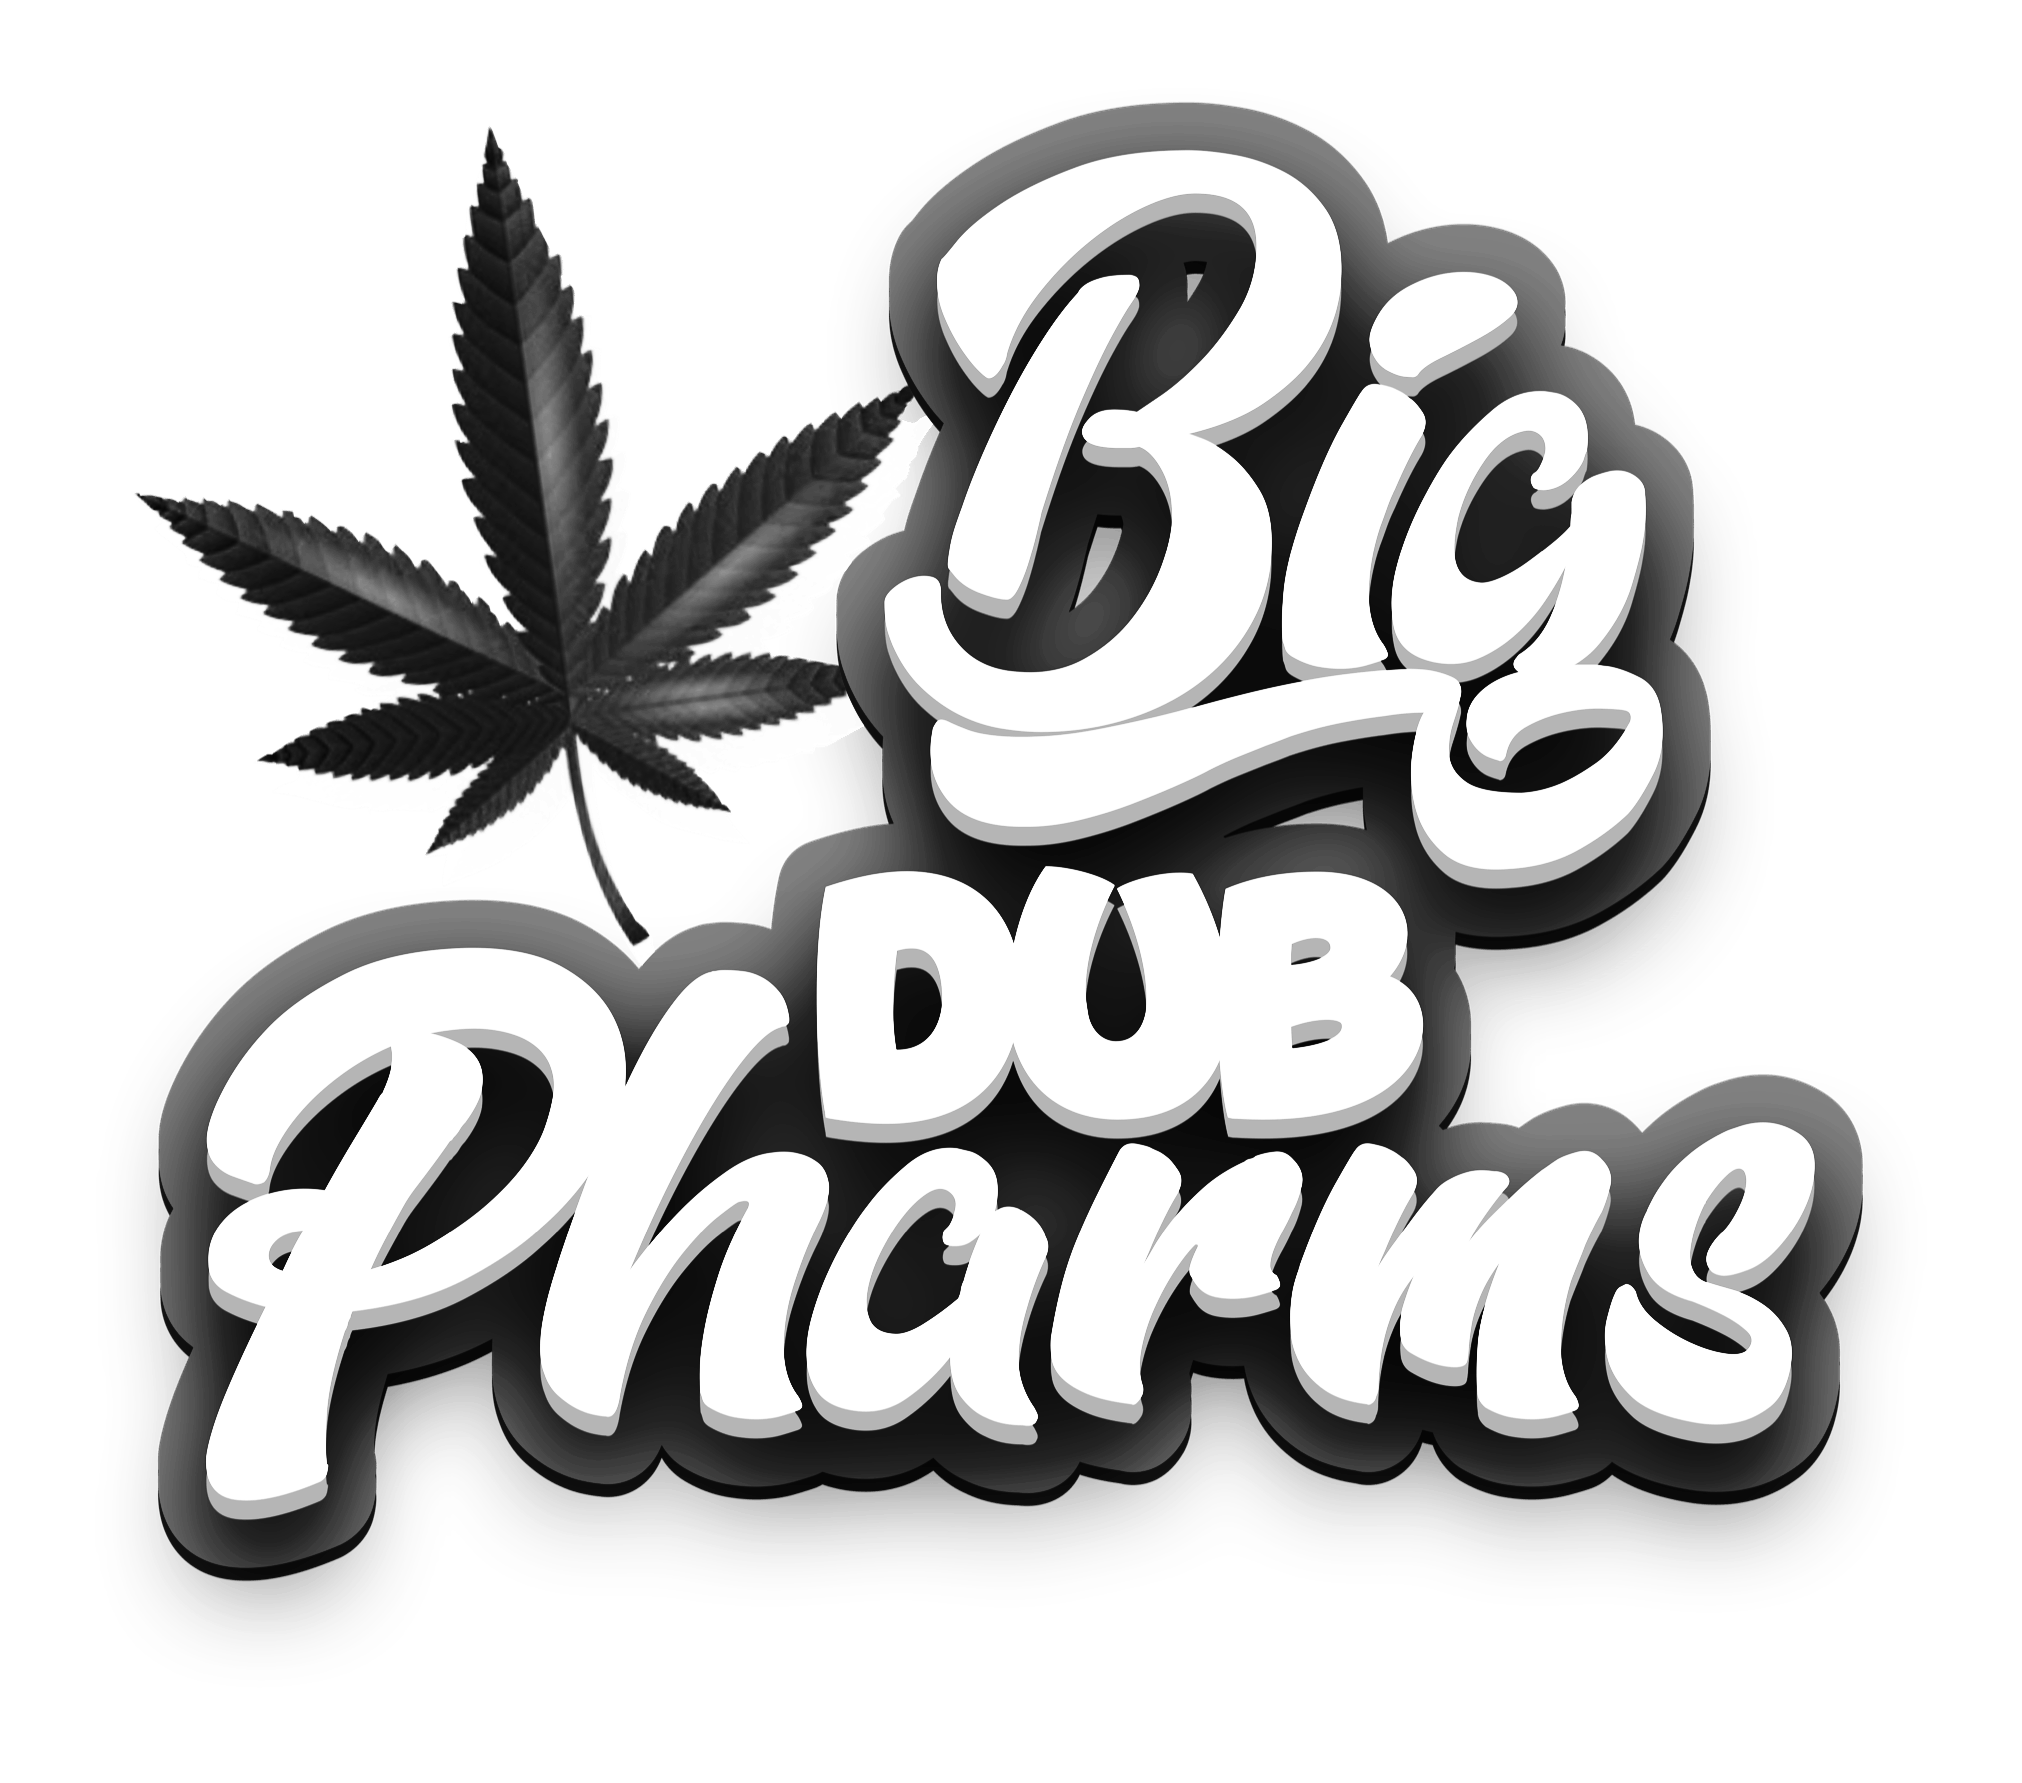 Big Dub Pharms Dispensary